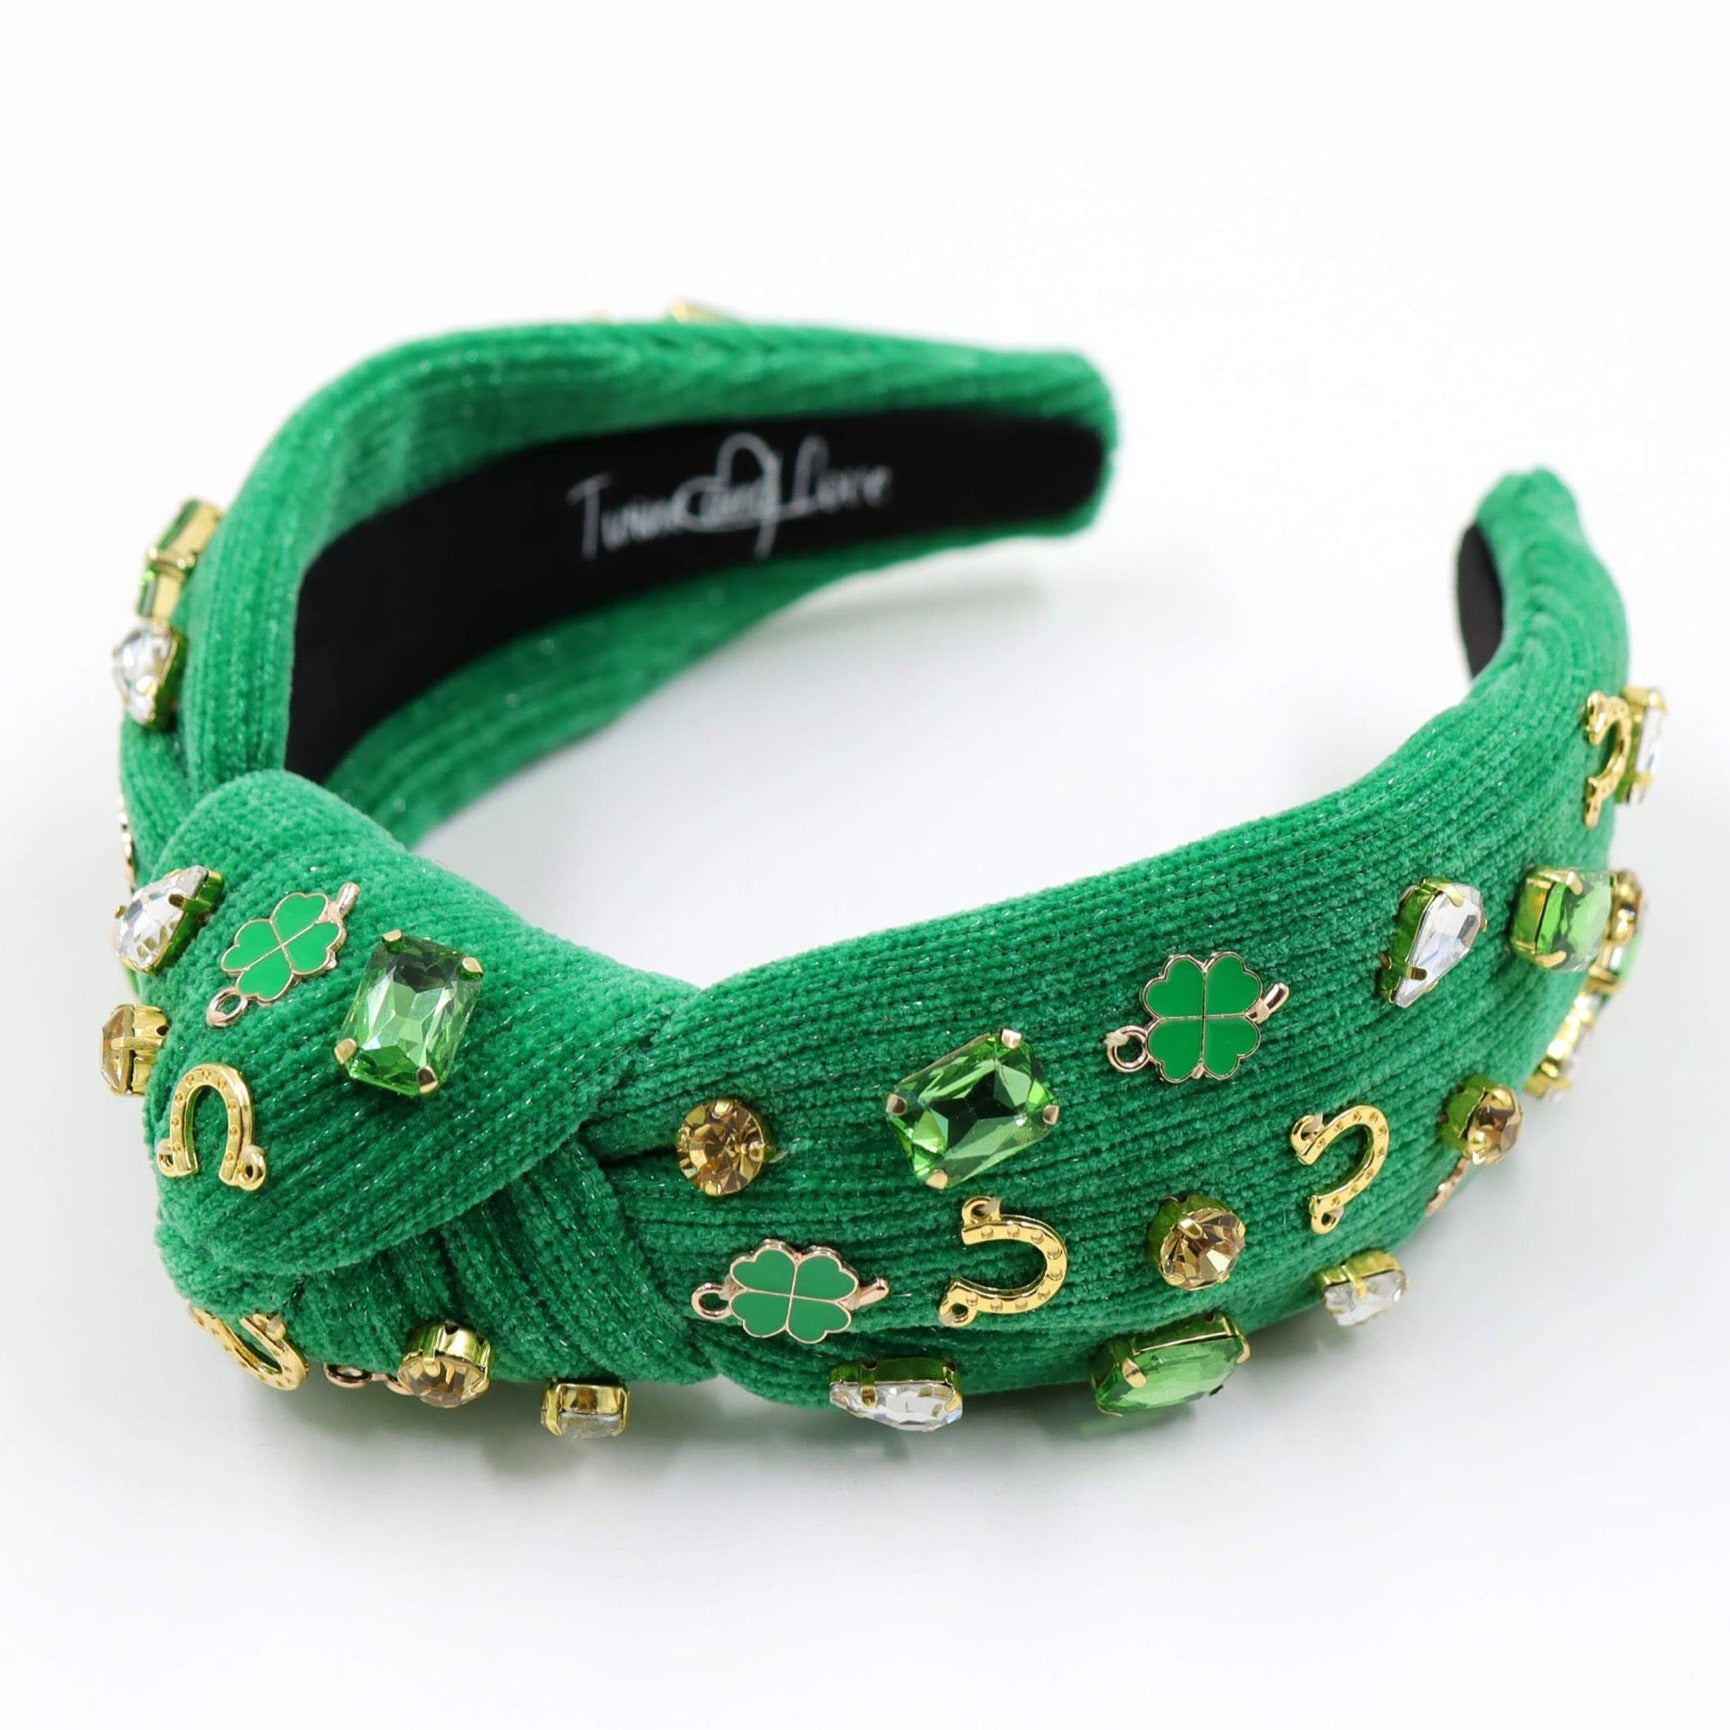 Green knotted headband